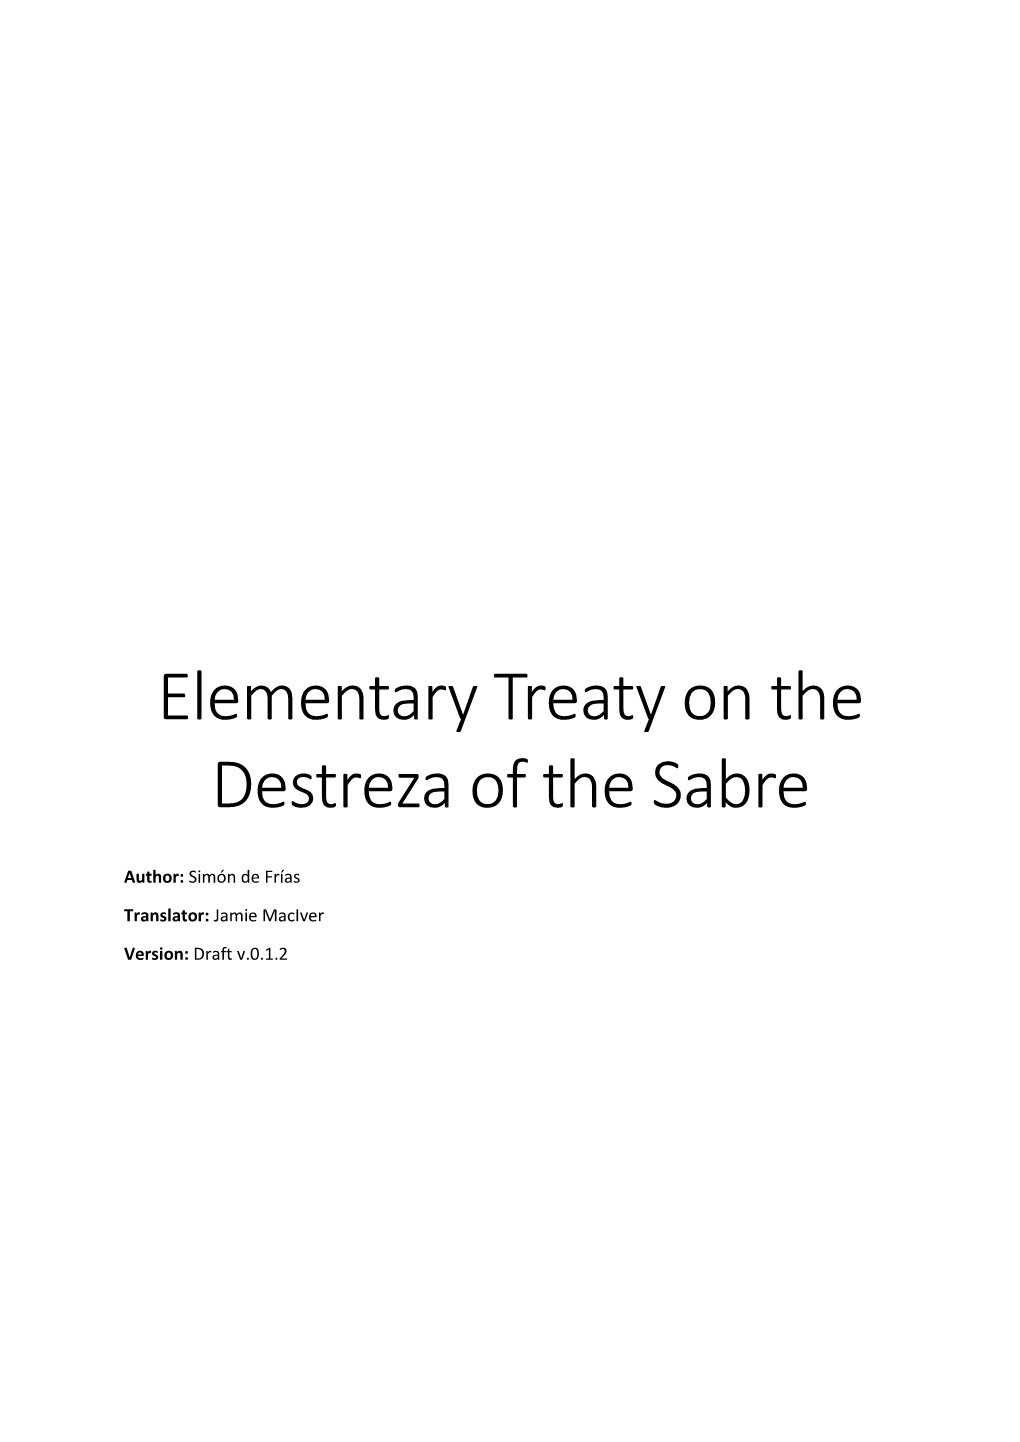 Elementary Treaty on the Destreza of the Sabre